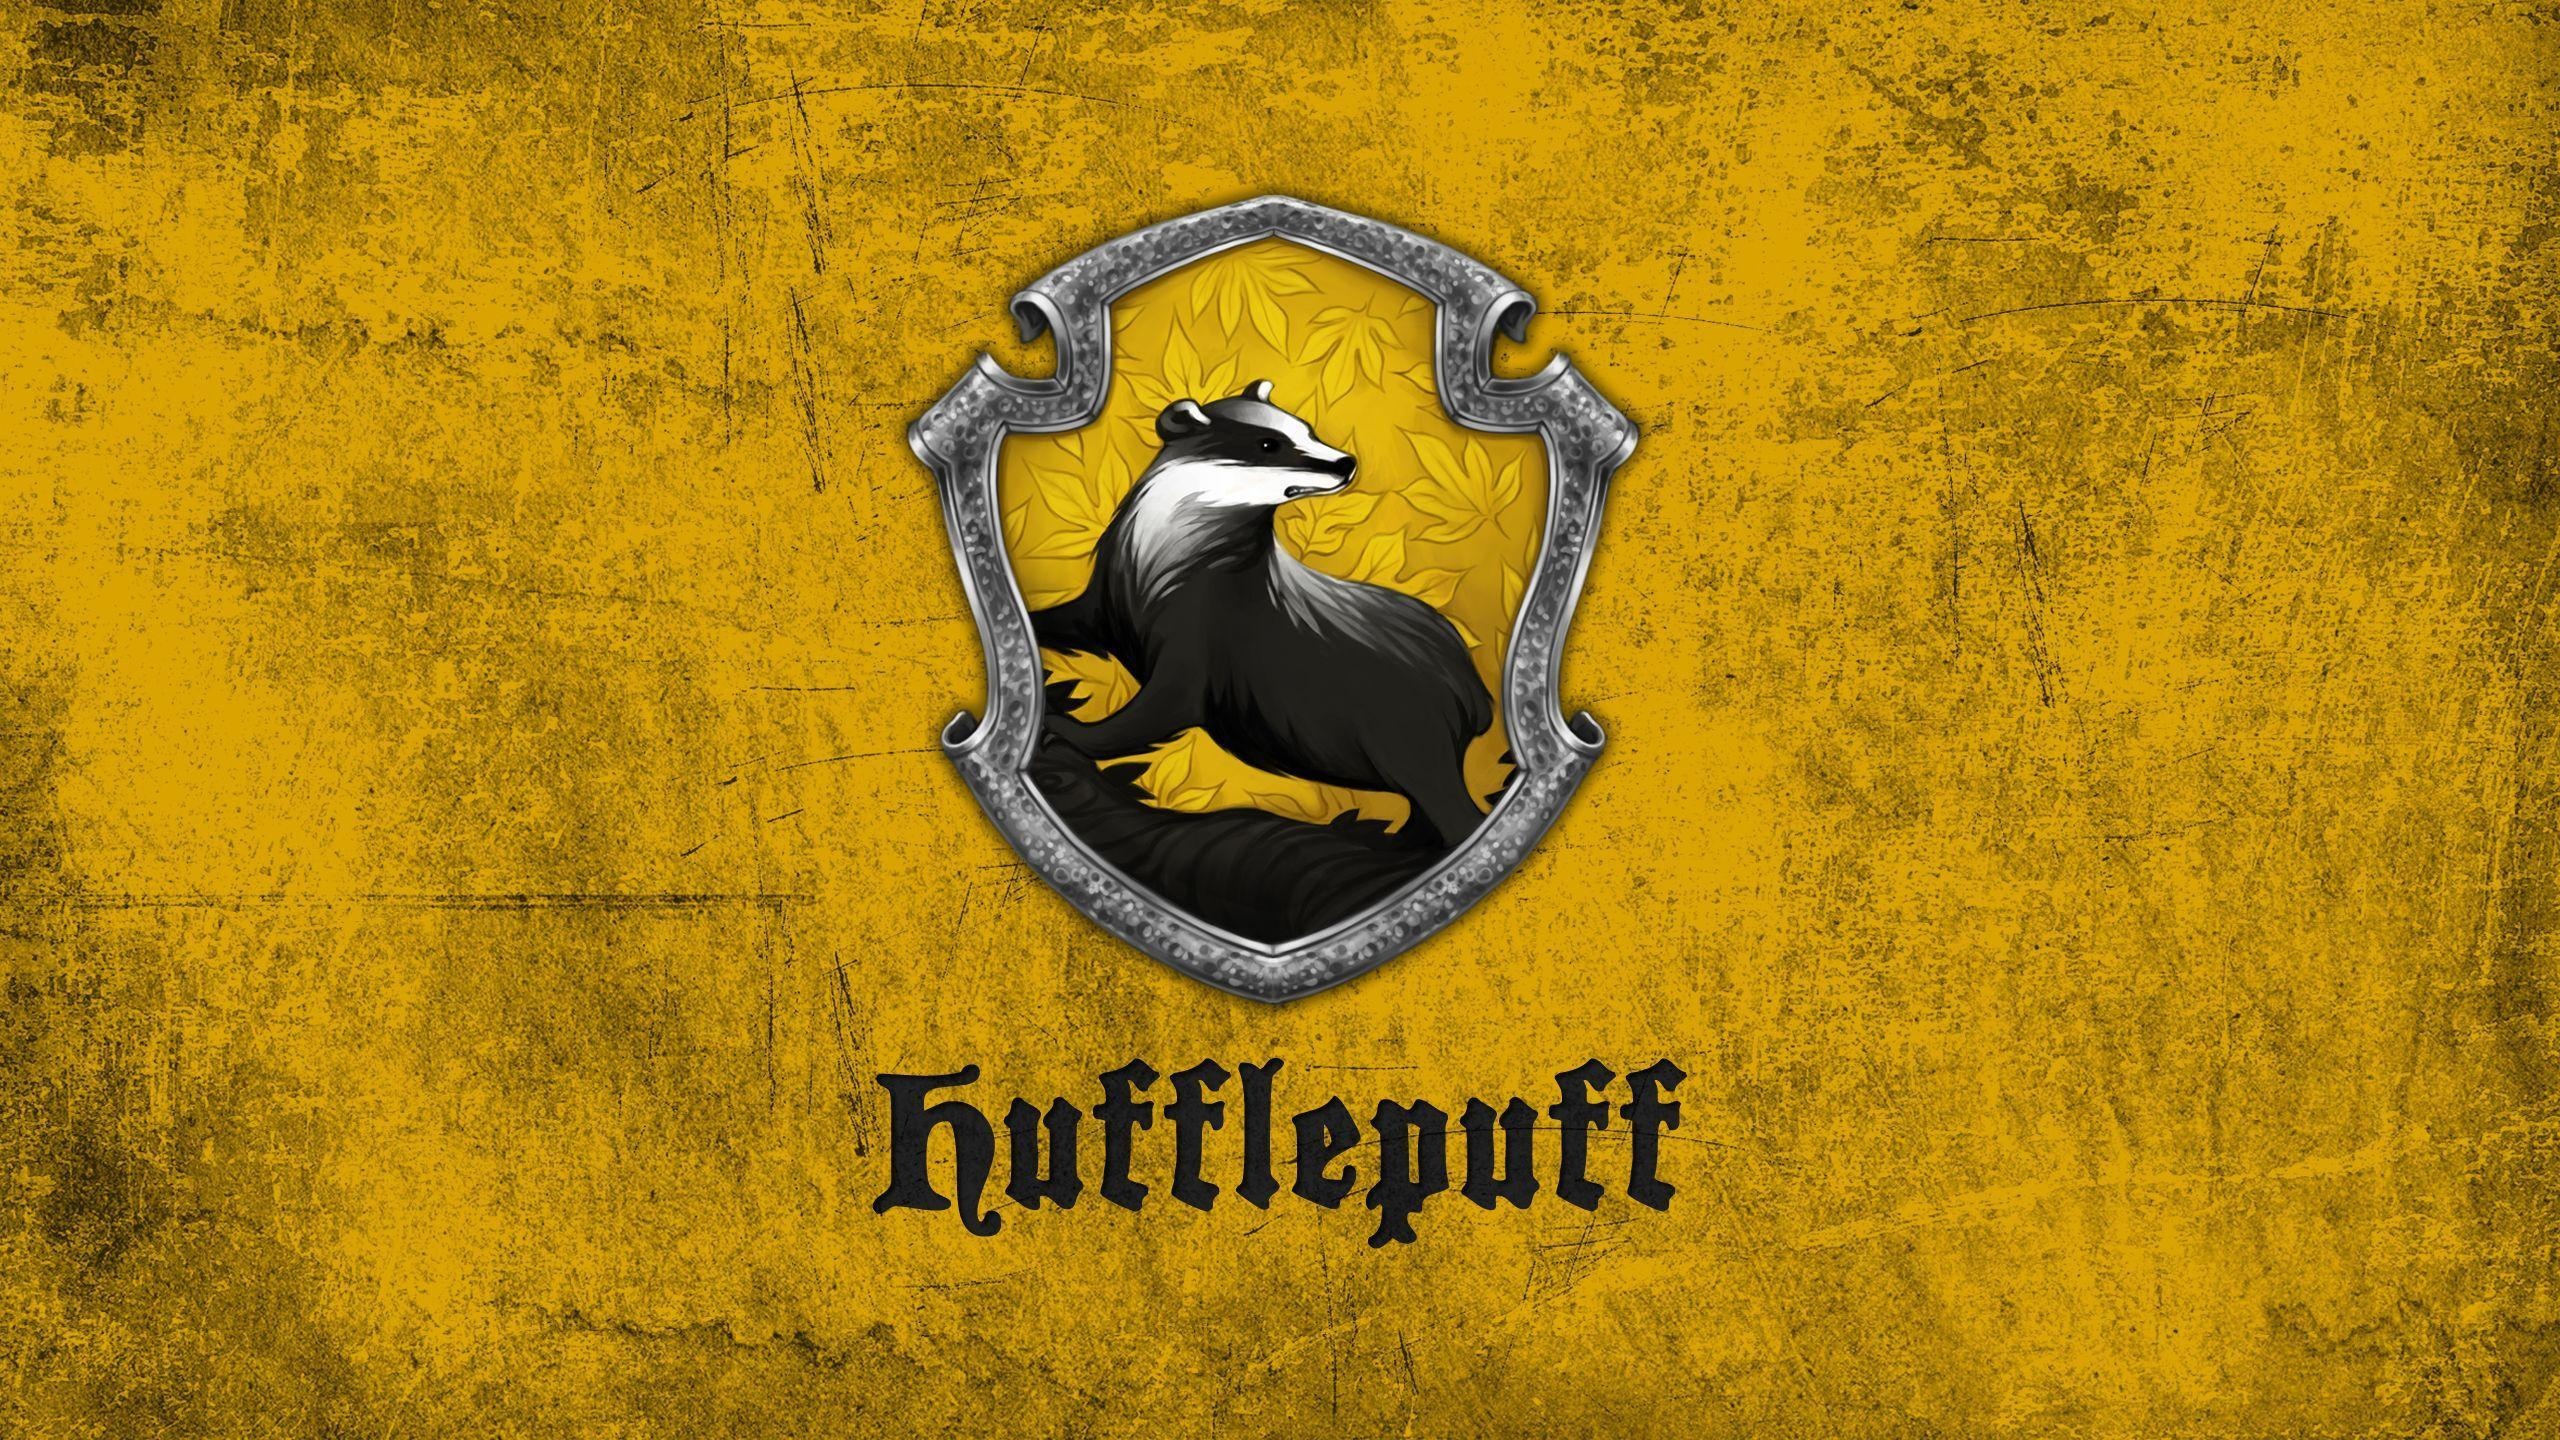 Hufflepuff logo wallpapers, Top free backgrounds, House pride, Badger emblem, 2560x1440 HD Desktop